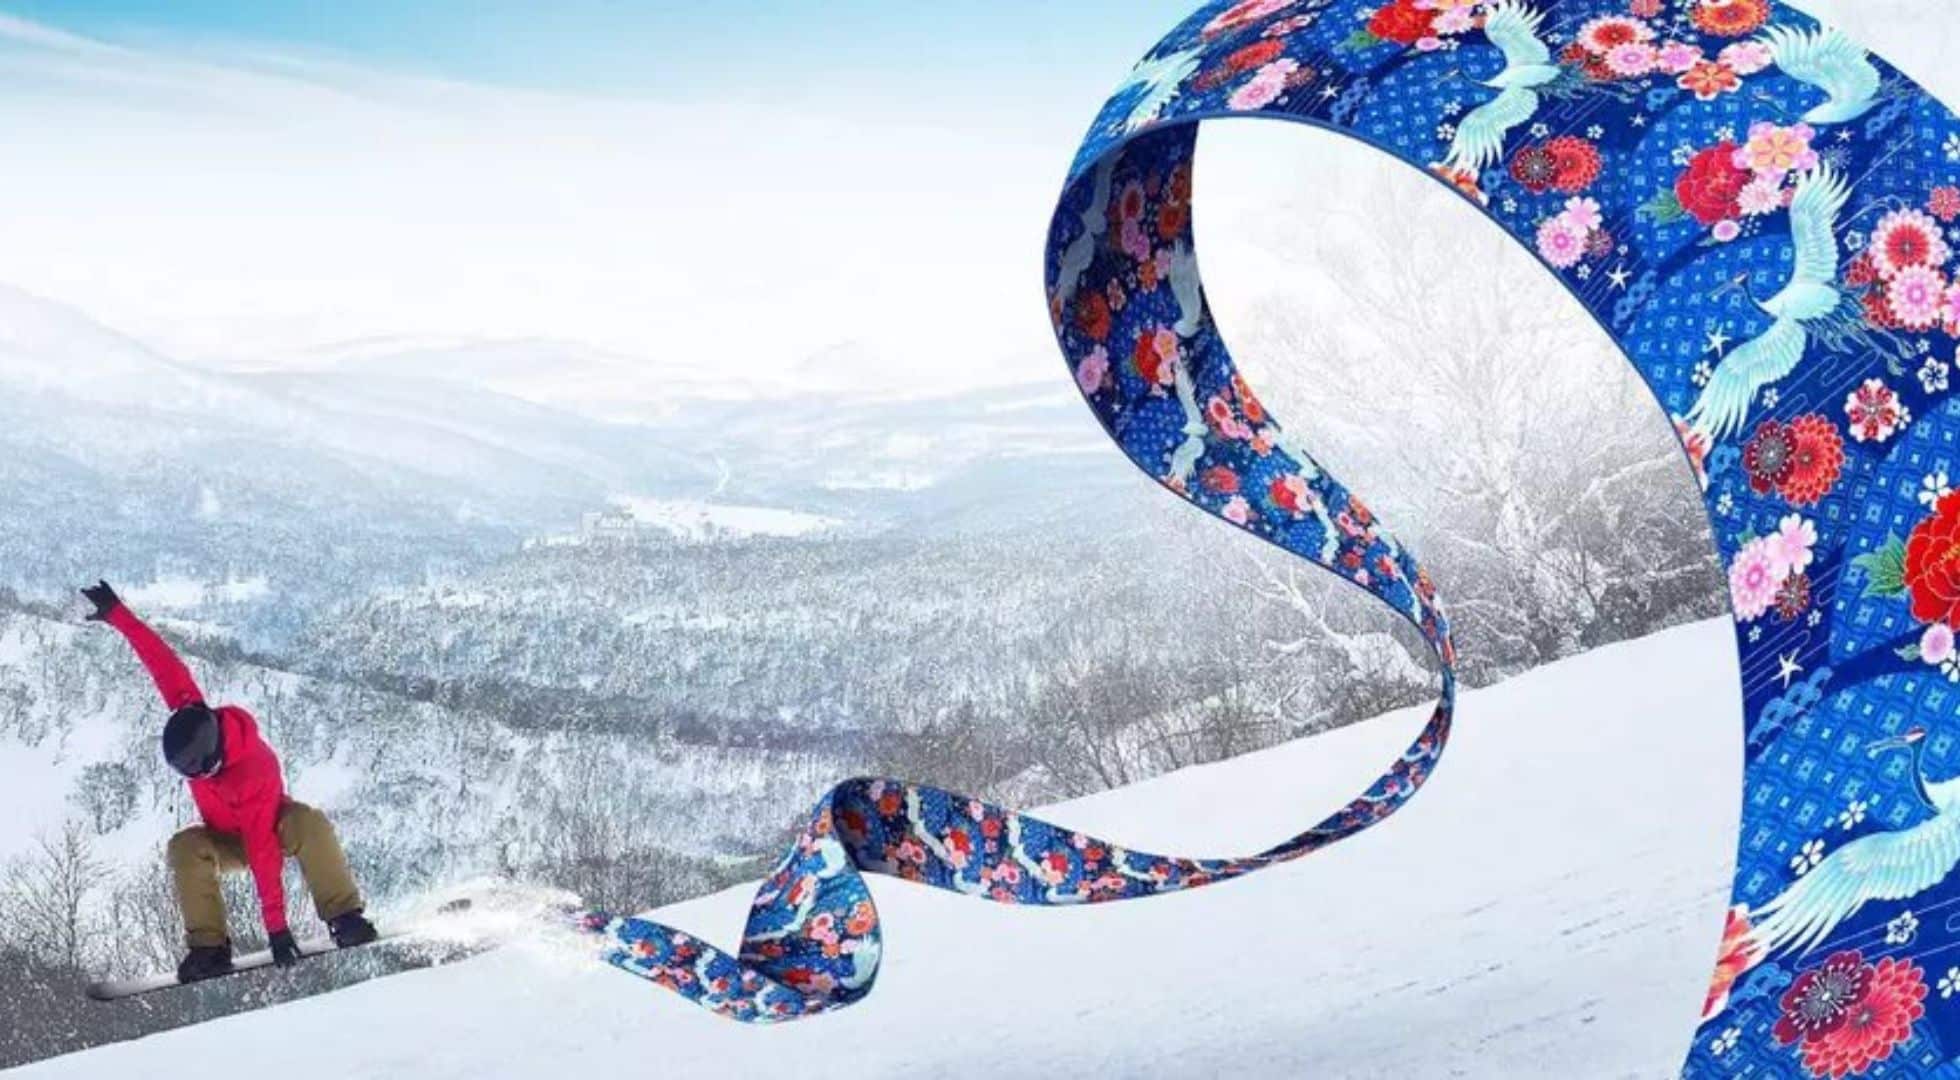 Club Med has three Japan ski resorts in Hokkaido